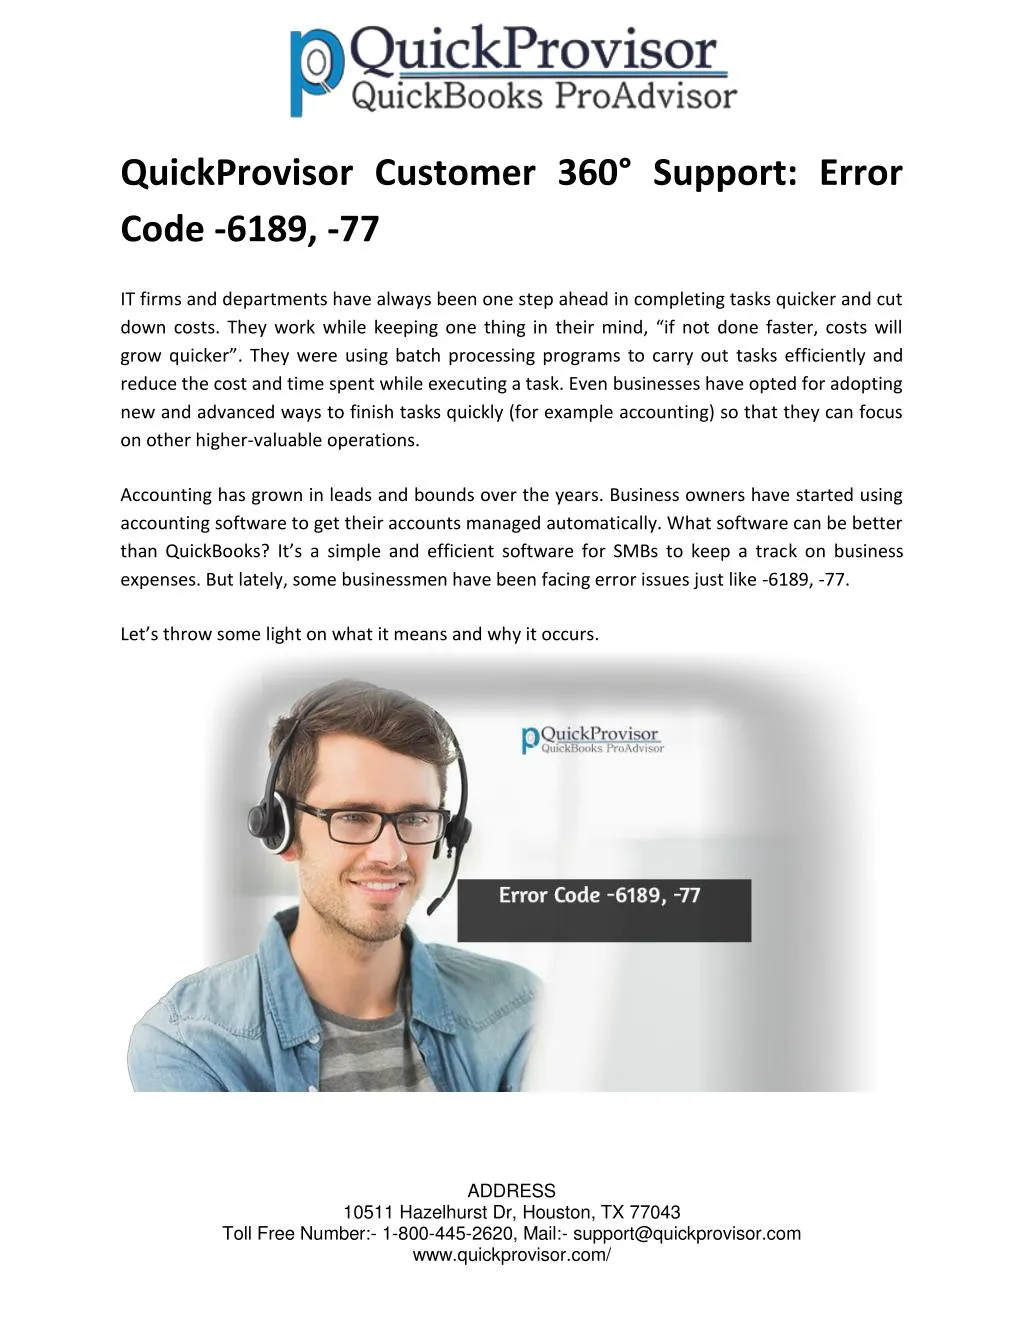 quickprovisor customer 360 support error code